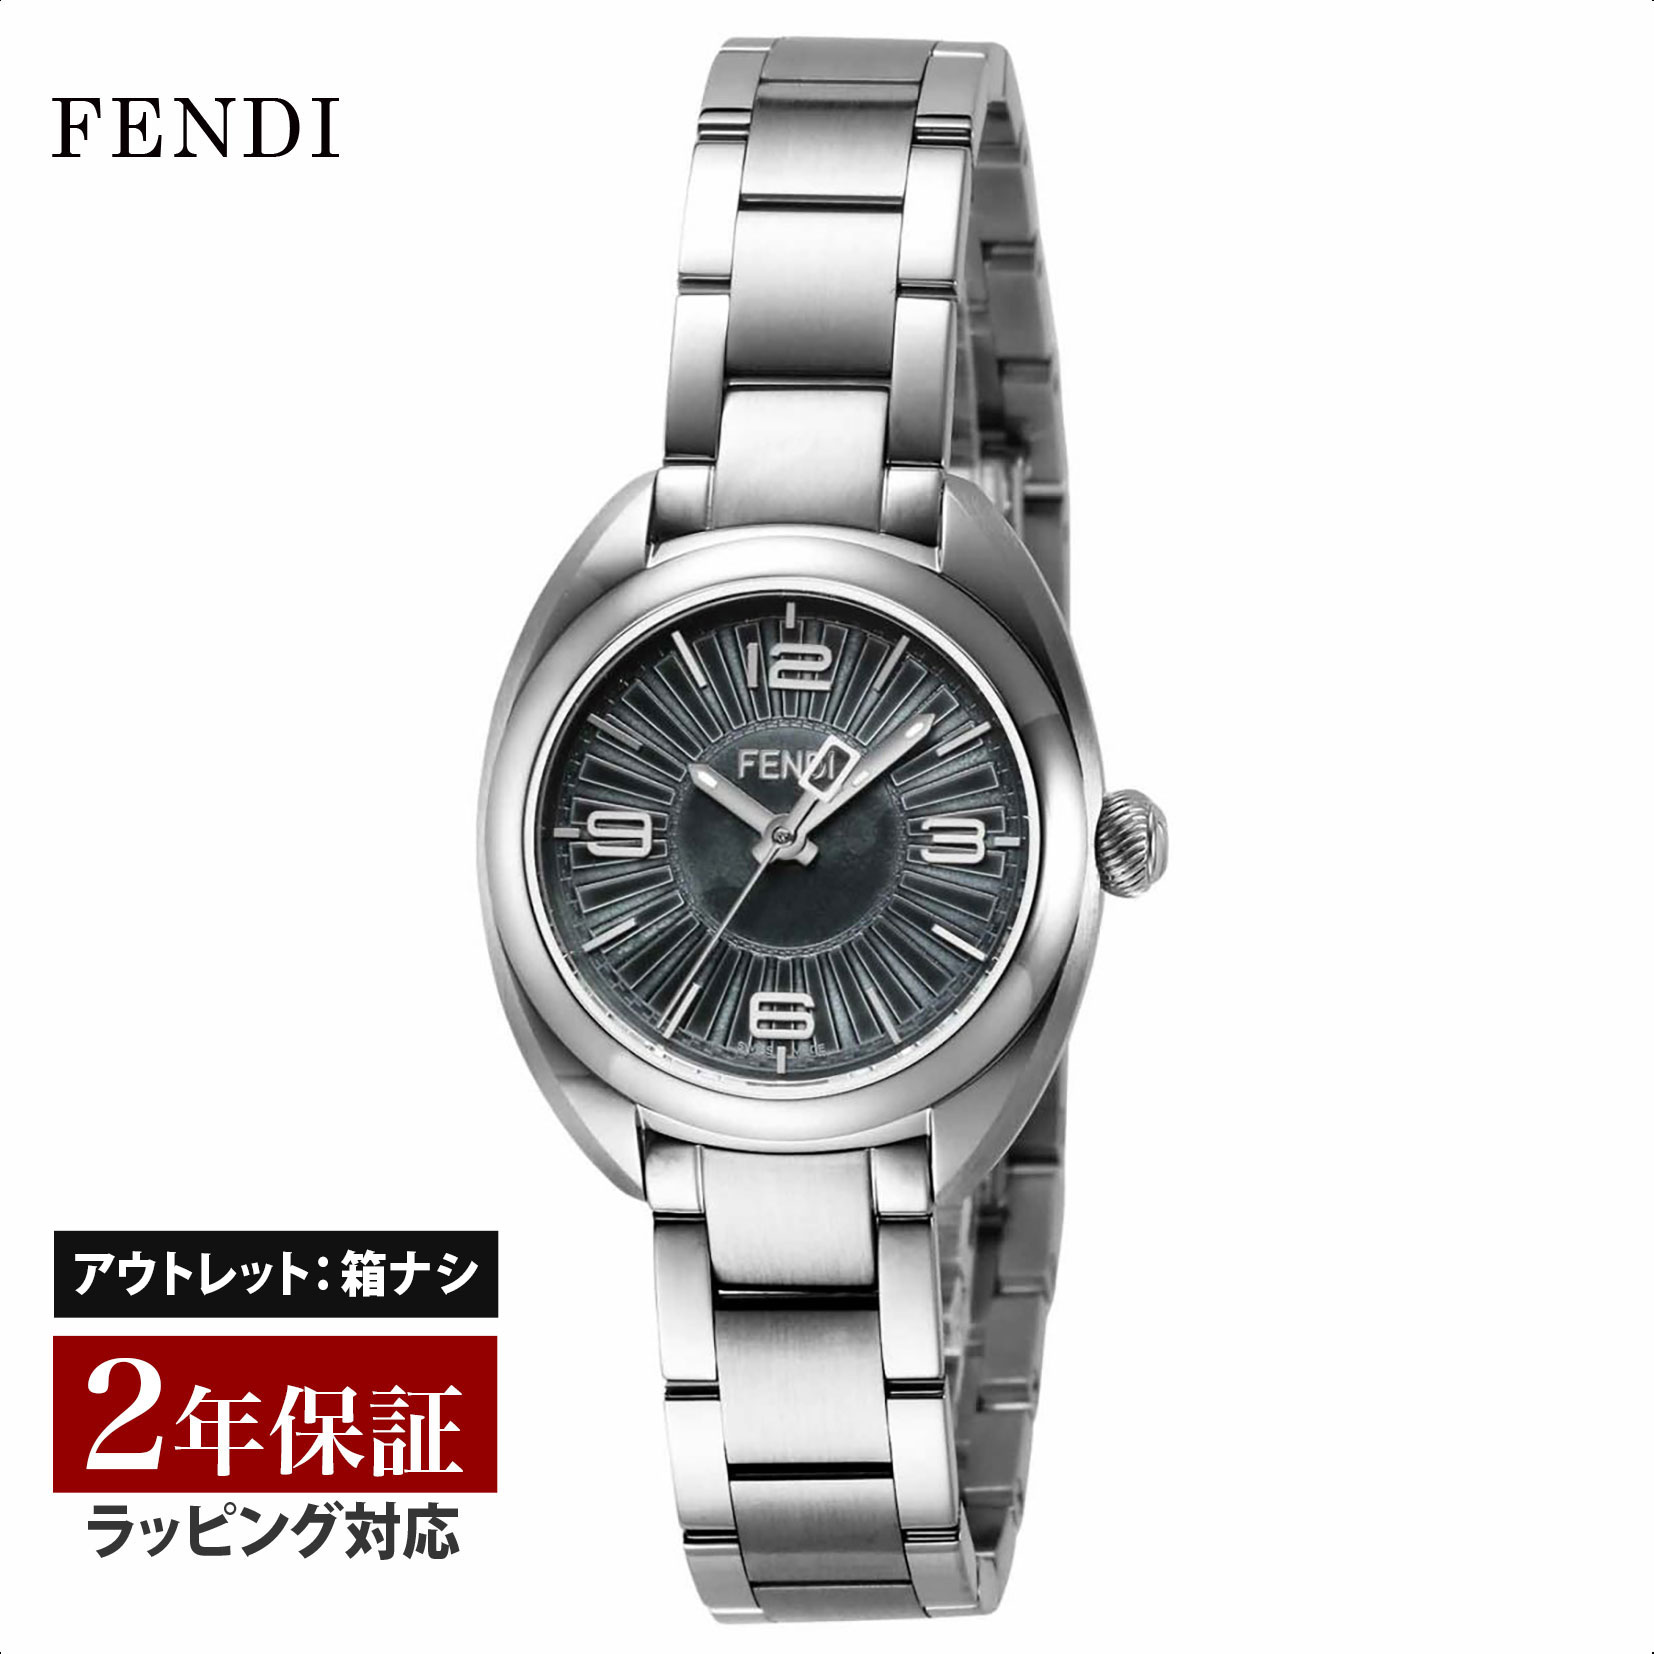 【OUTLET】 フェンディ FENDI レディース 時計 MomentoFendi クォーツ ブラック F218021500 時計 腕時計 高級腕時計 ブランド 【クリアランス】